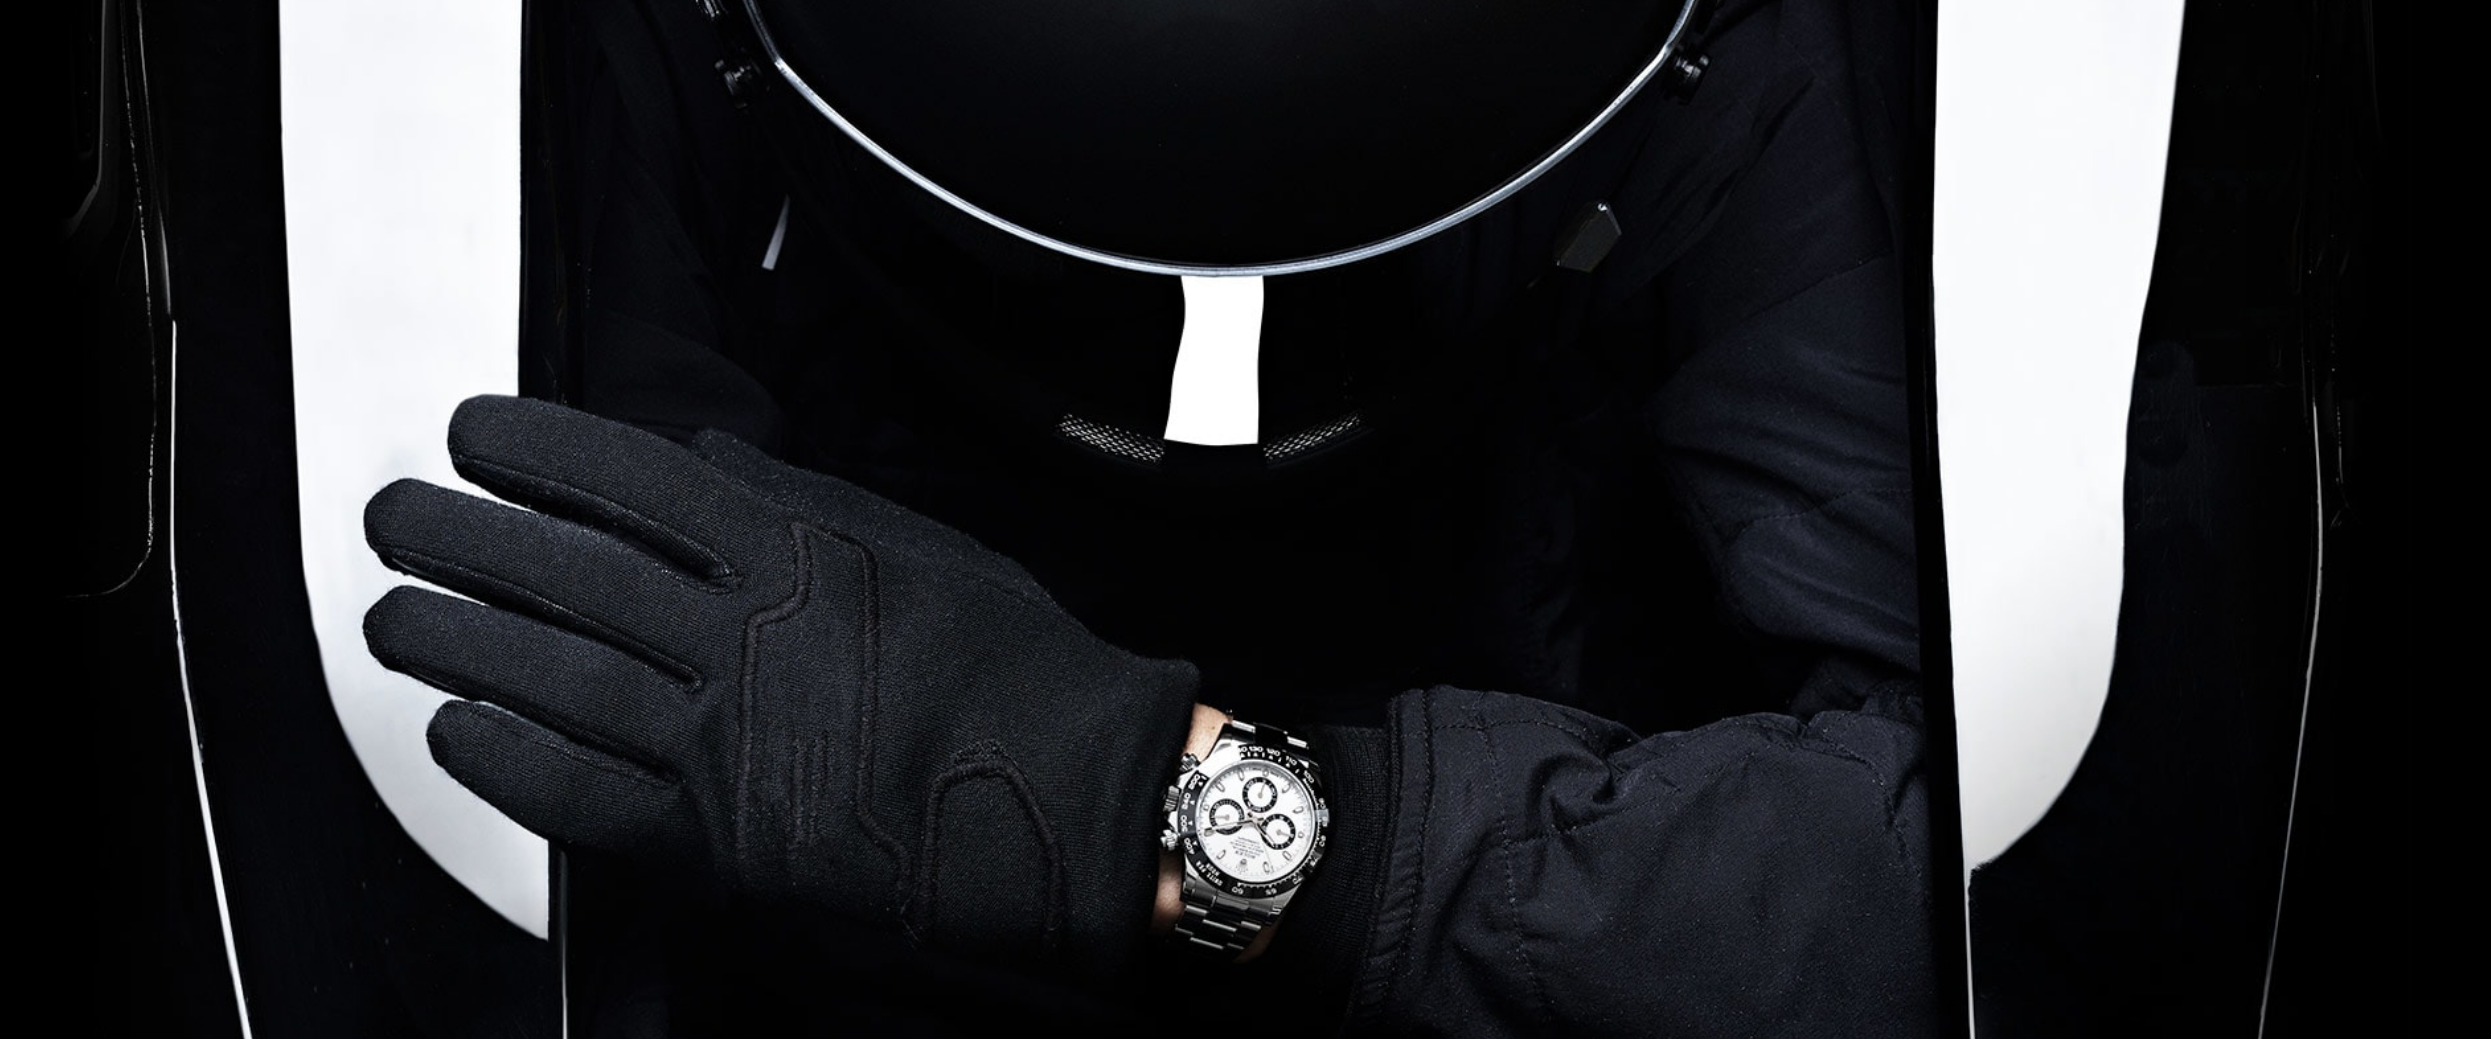 Rolex Daytona: The History Behind this Amazing Timepiece